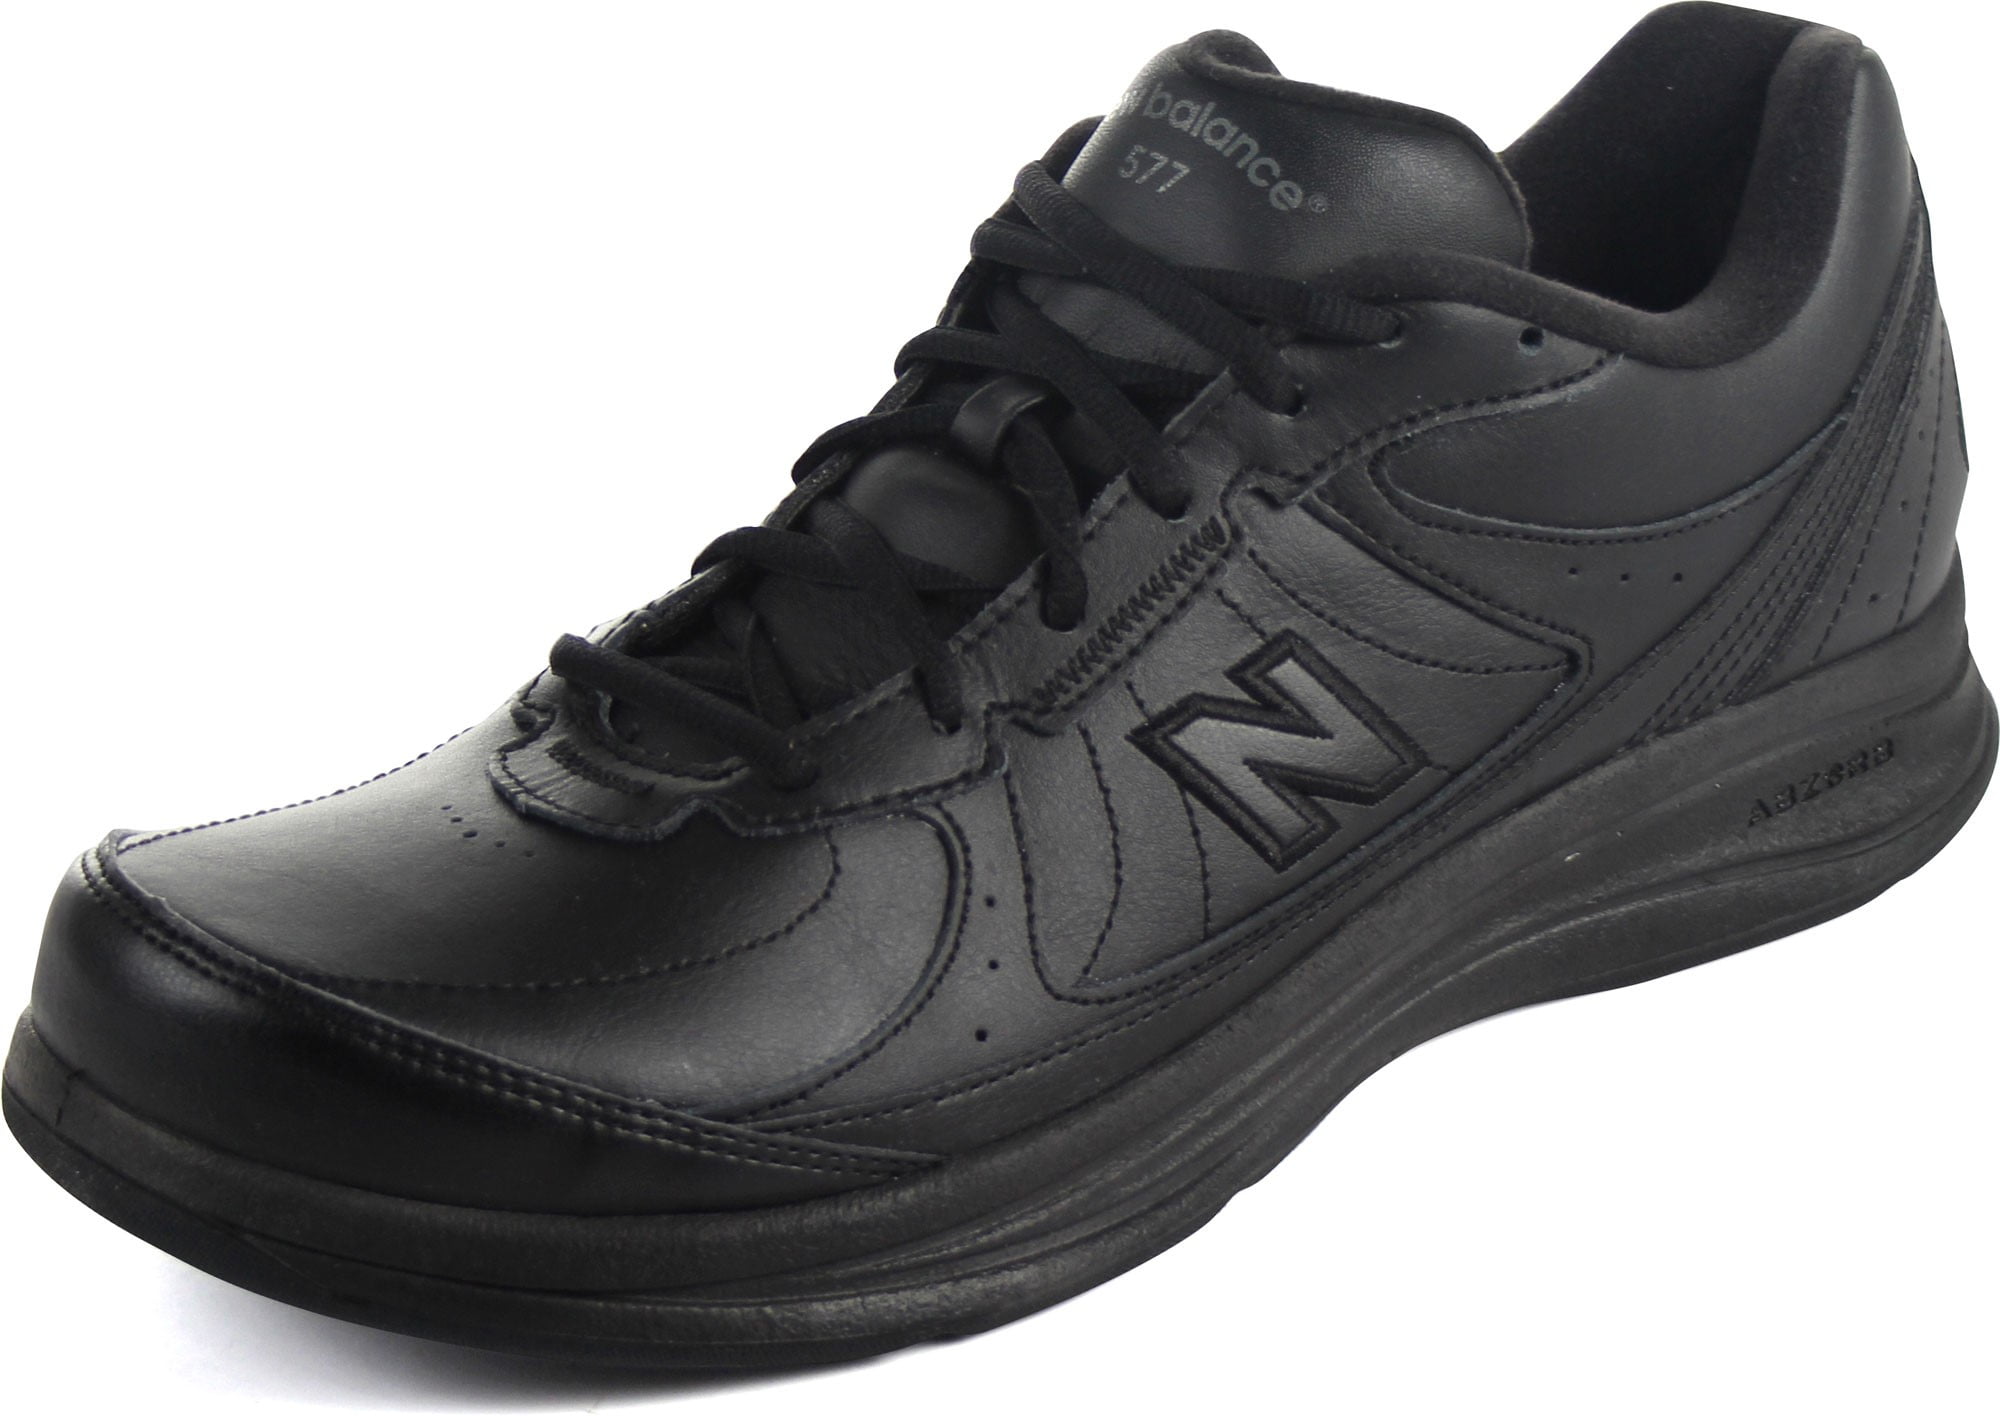 New Balance new balance men's mw577 black walking shoe 11 4e us